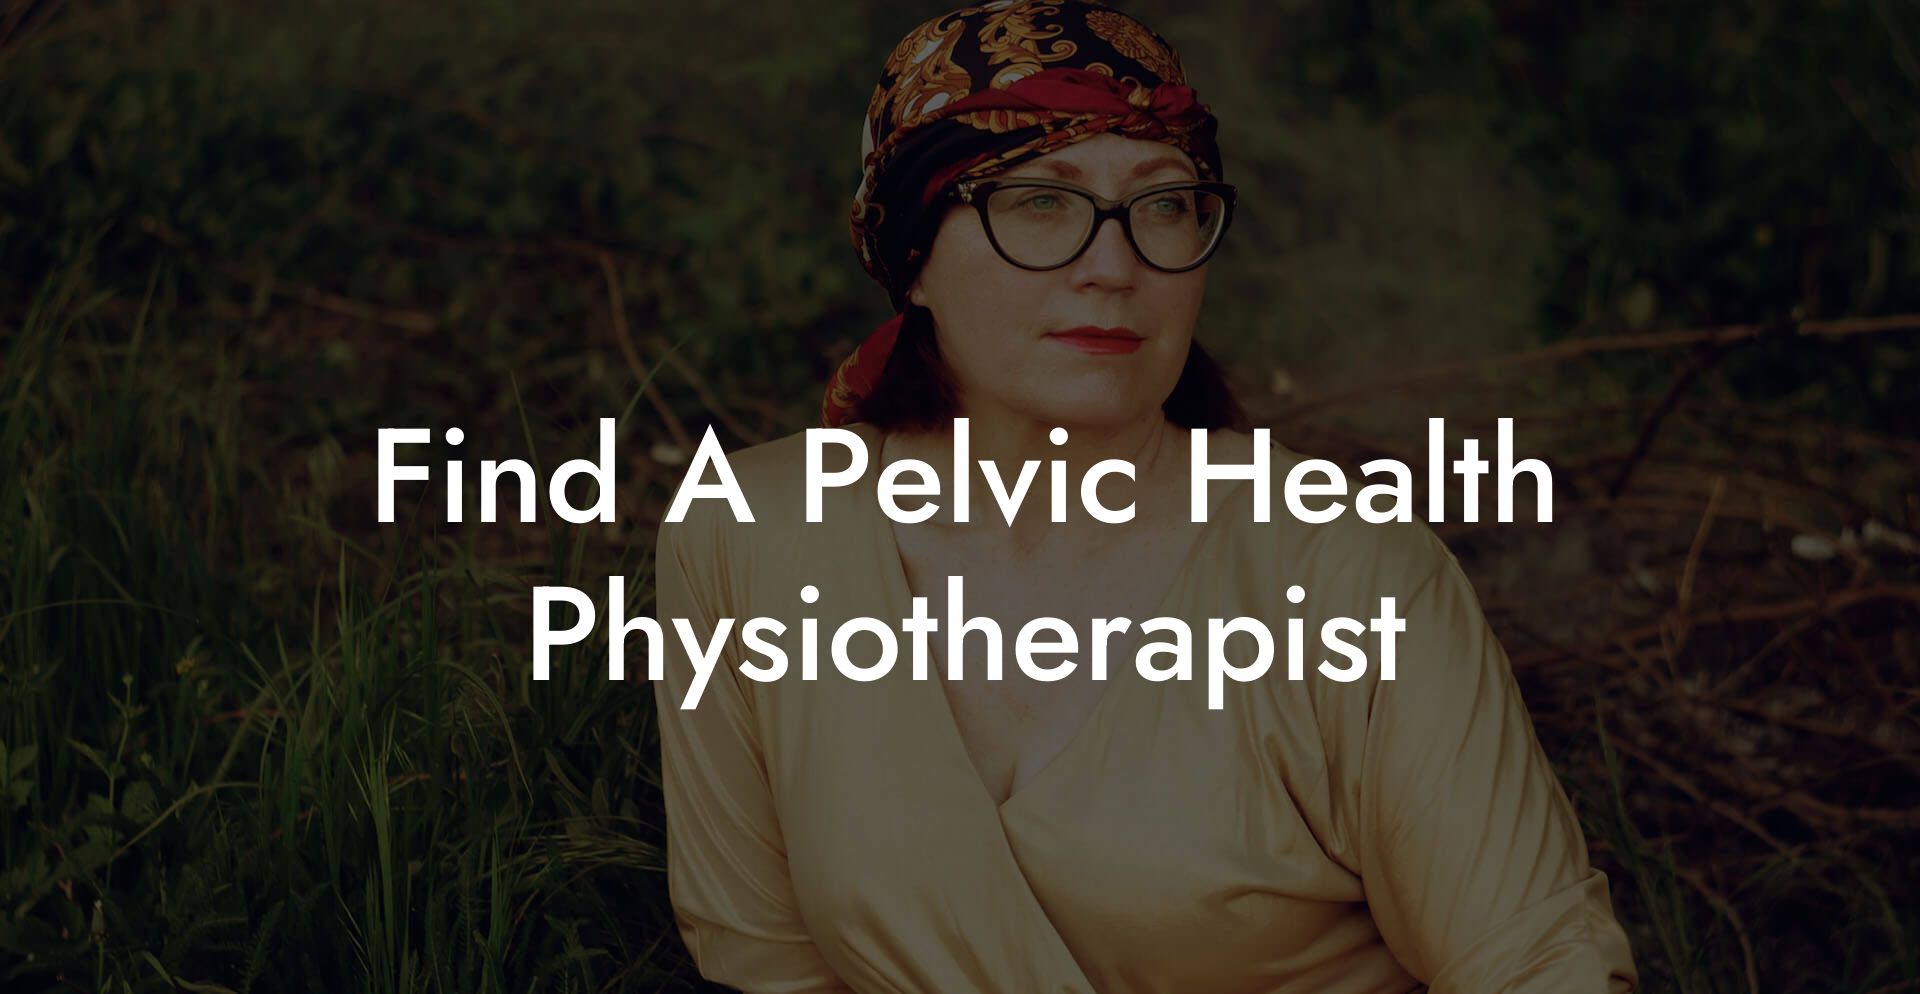 Find A Pelvic Health Physiotherapist